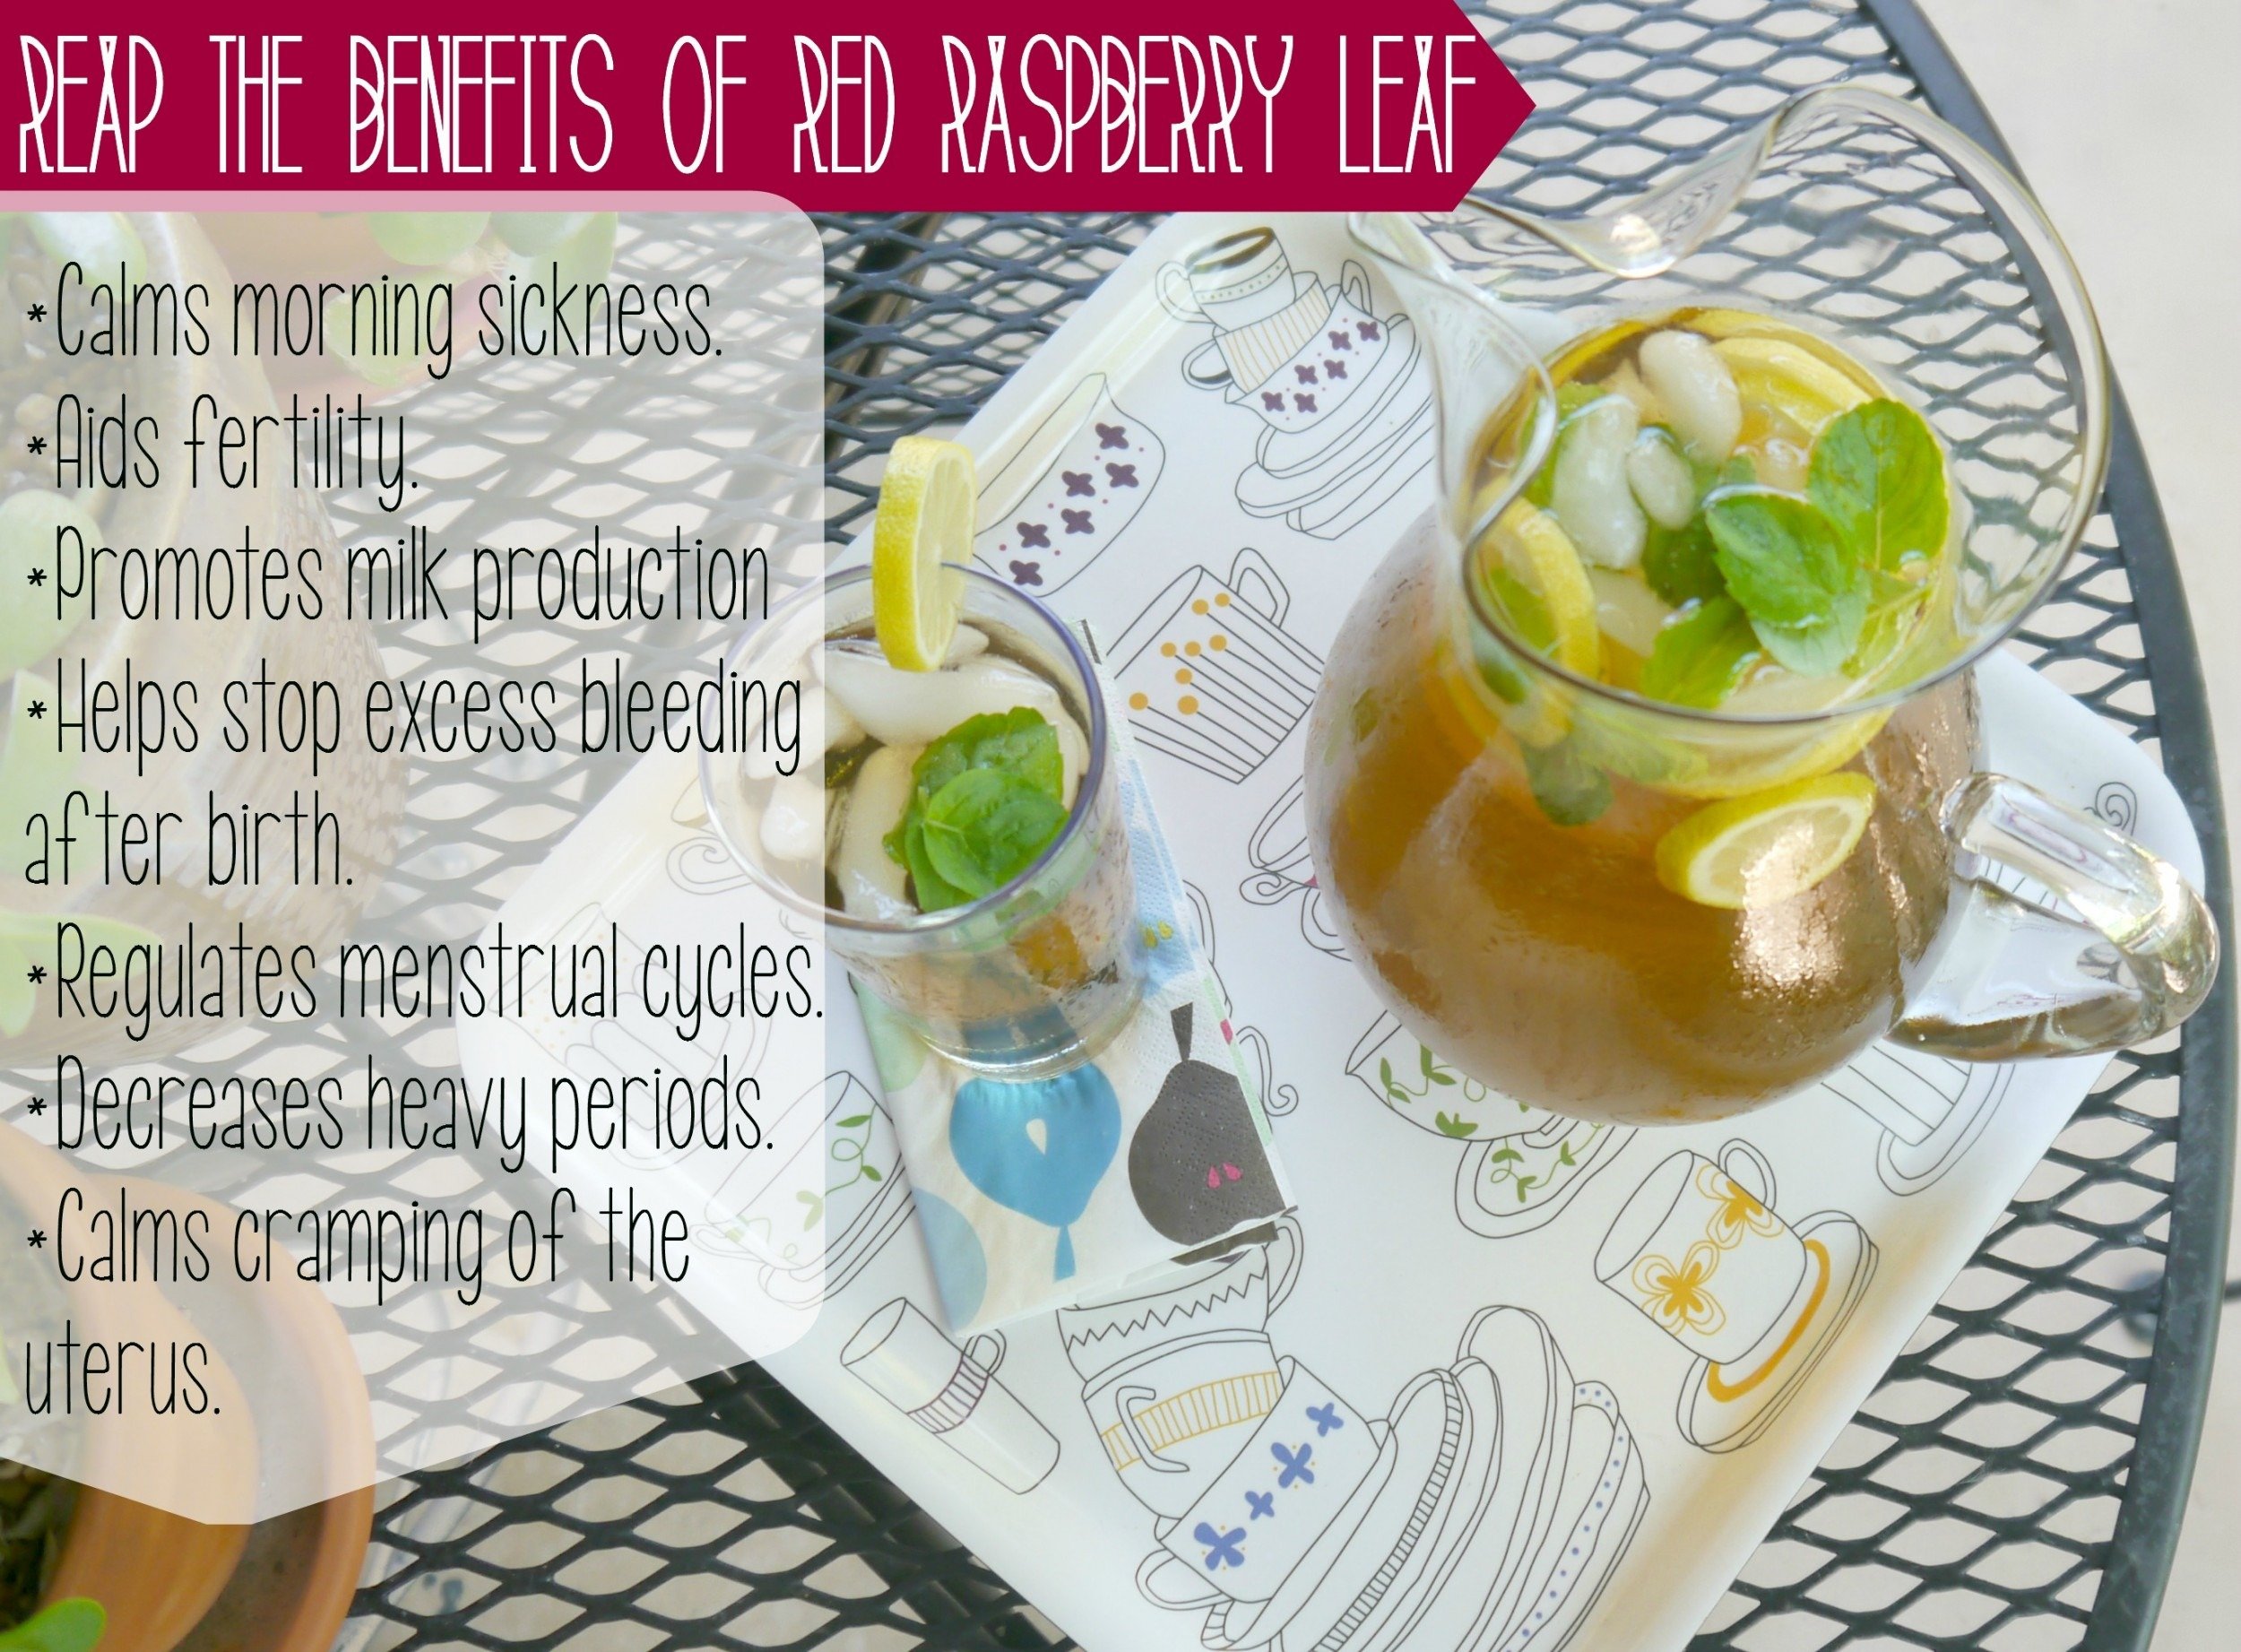 Benefits of Red Raspberry Leaf